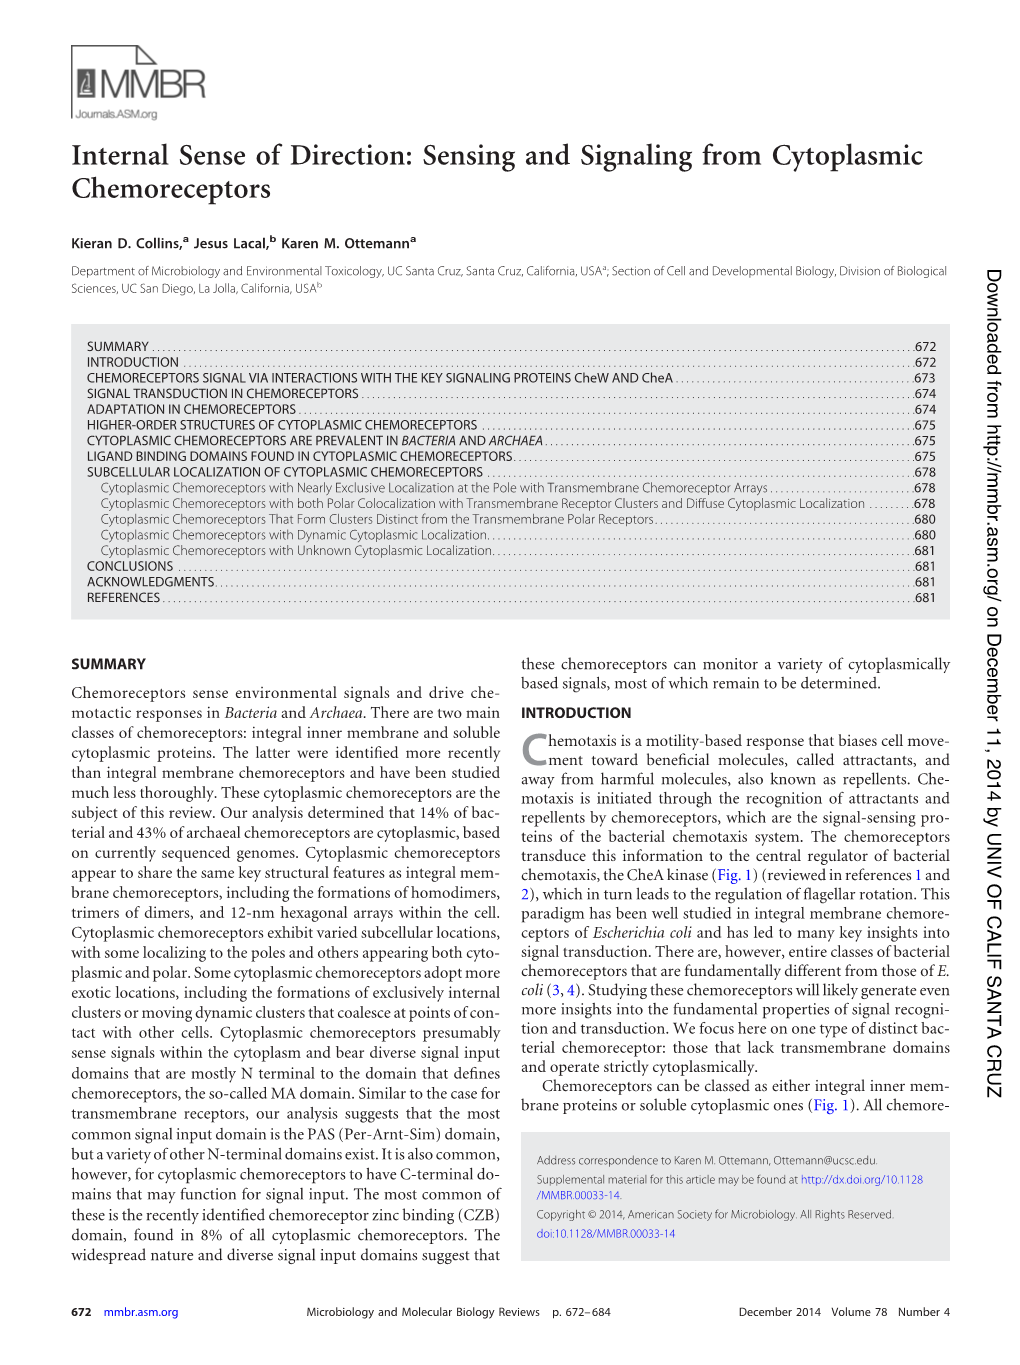 Sensing and Signaling from Cytoplasmic Chemoreceptors